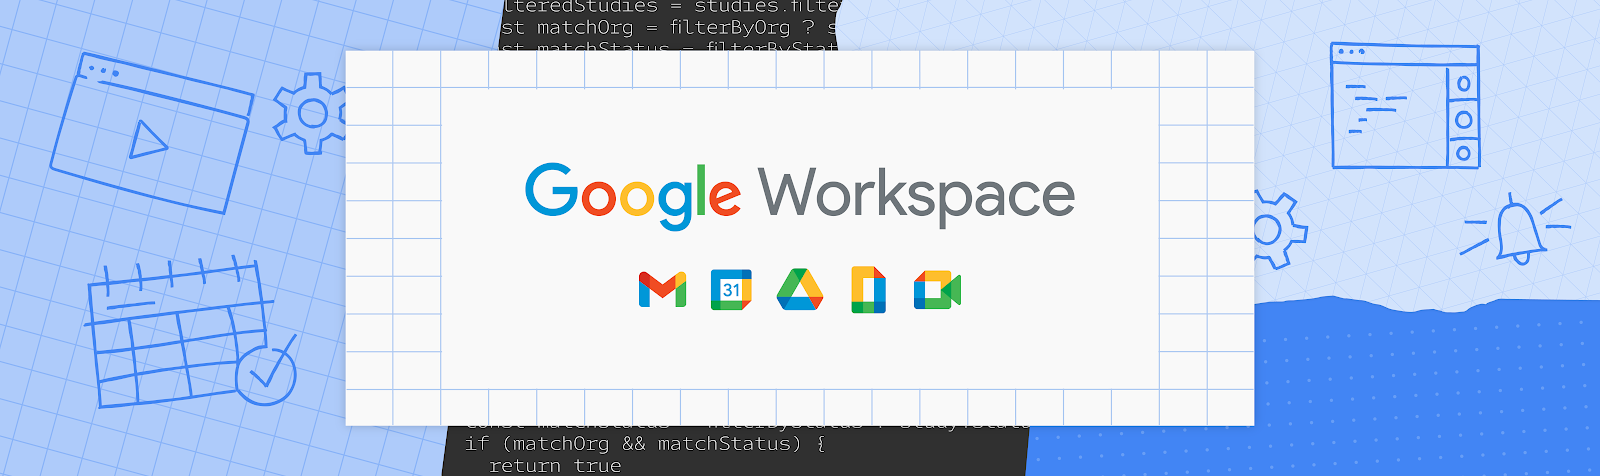 RingCentral for Google Workspace - Google Workspace Marketplace